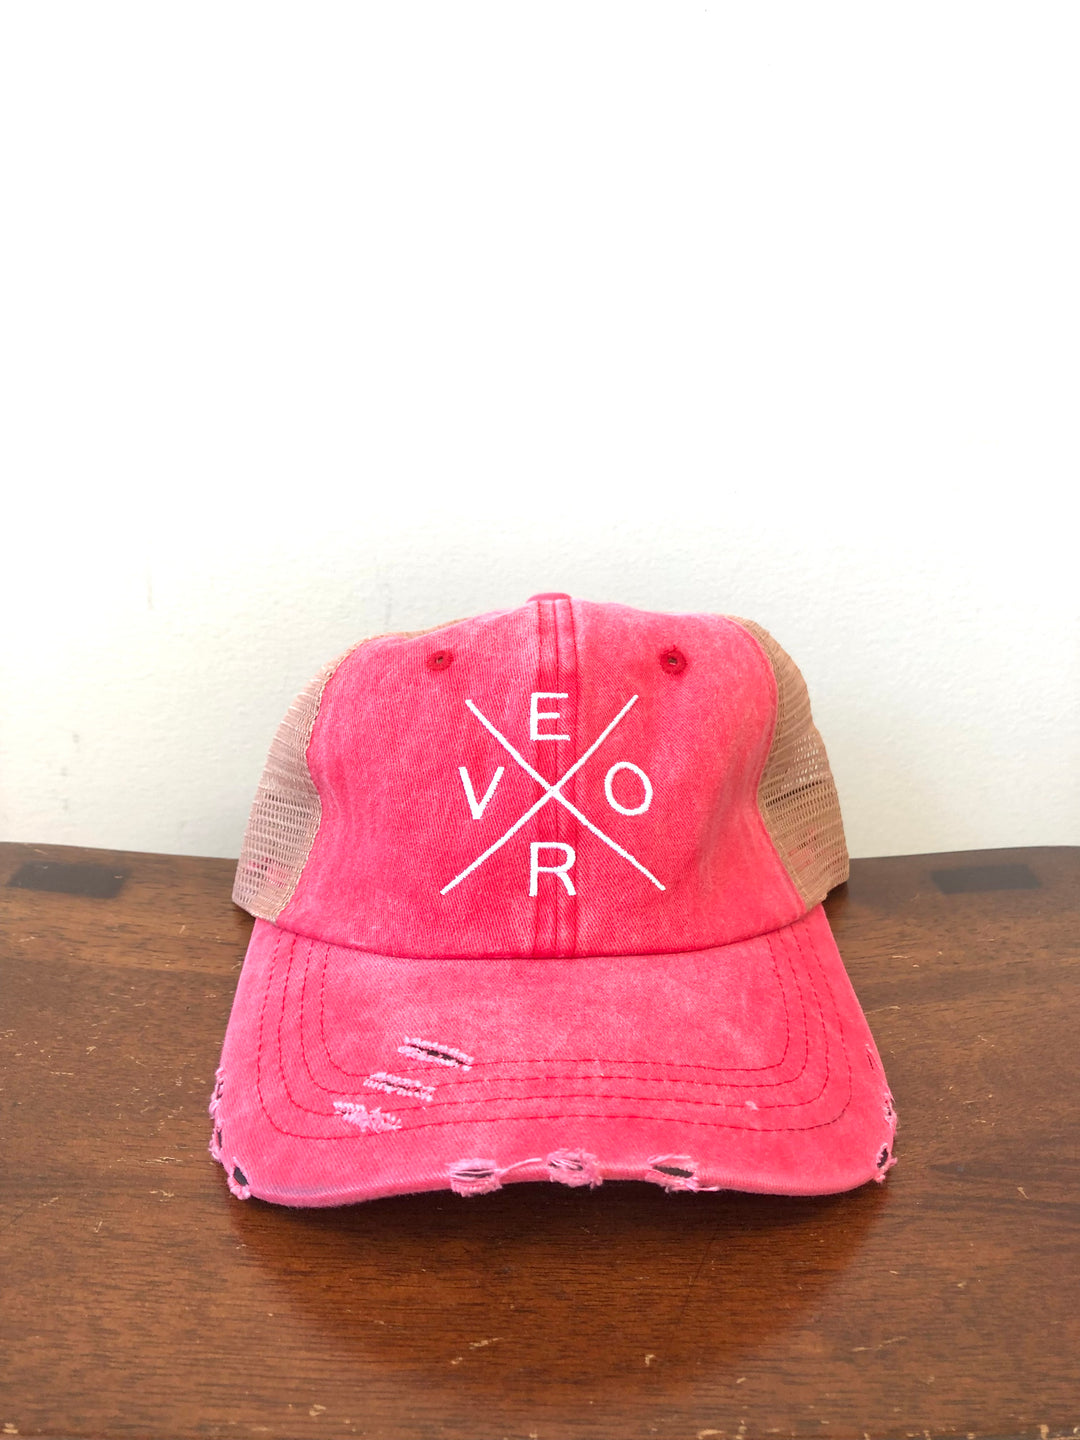 Vero Distressed Trucker Hat - Coral & Khaki